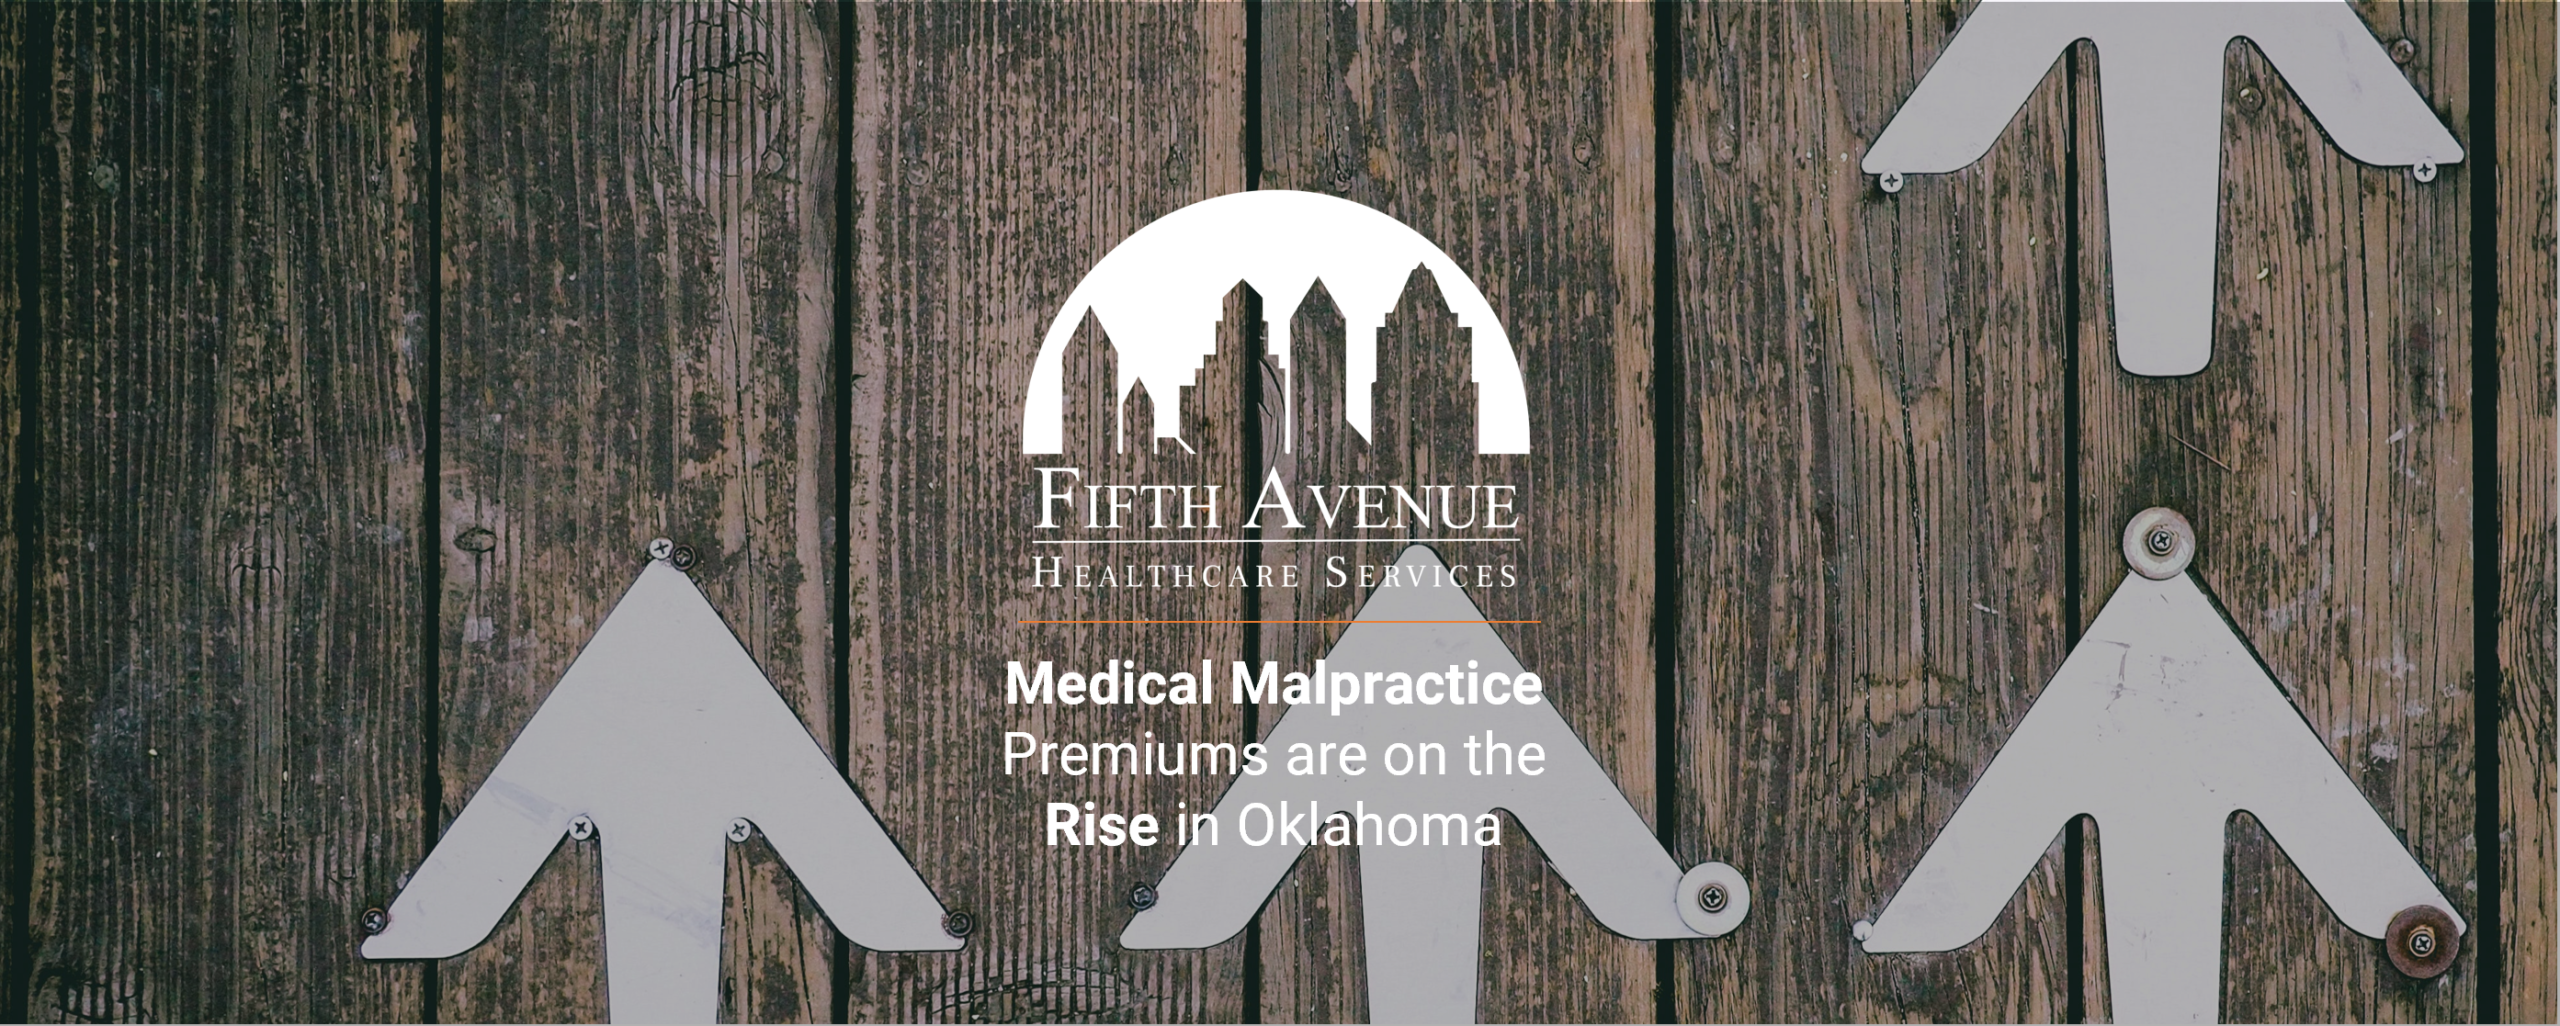 Medical Malpractice Premiums Rising 10-15% in OK